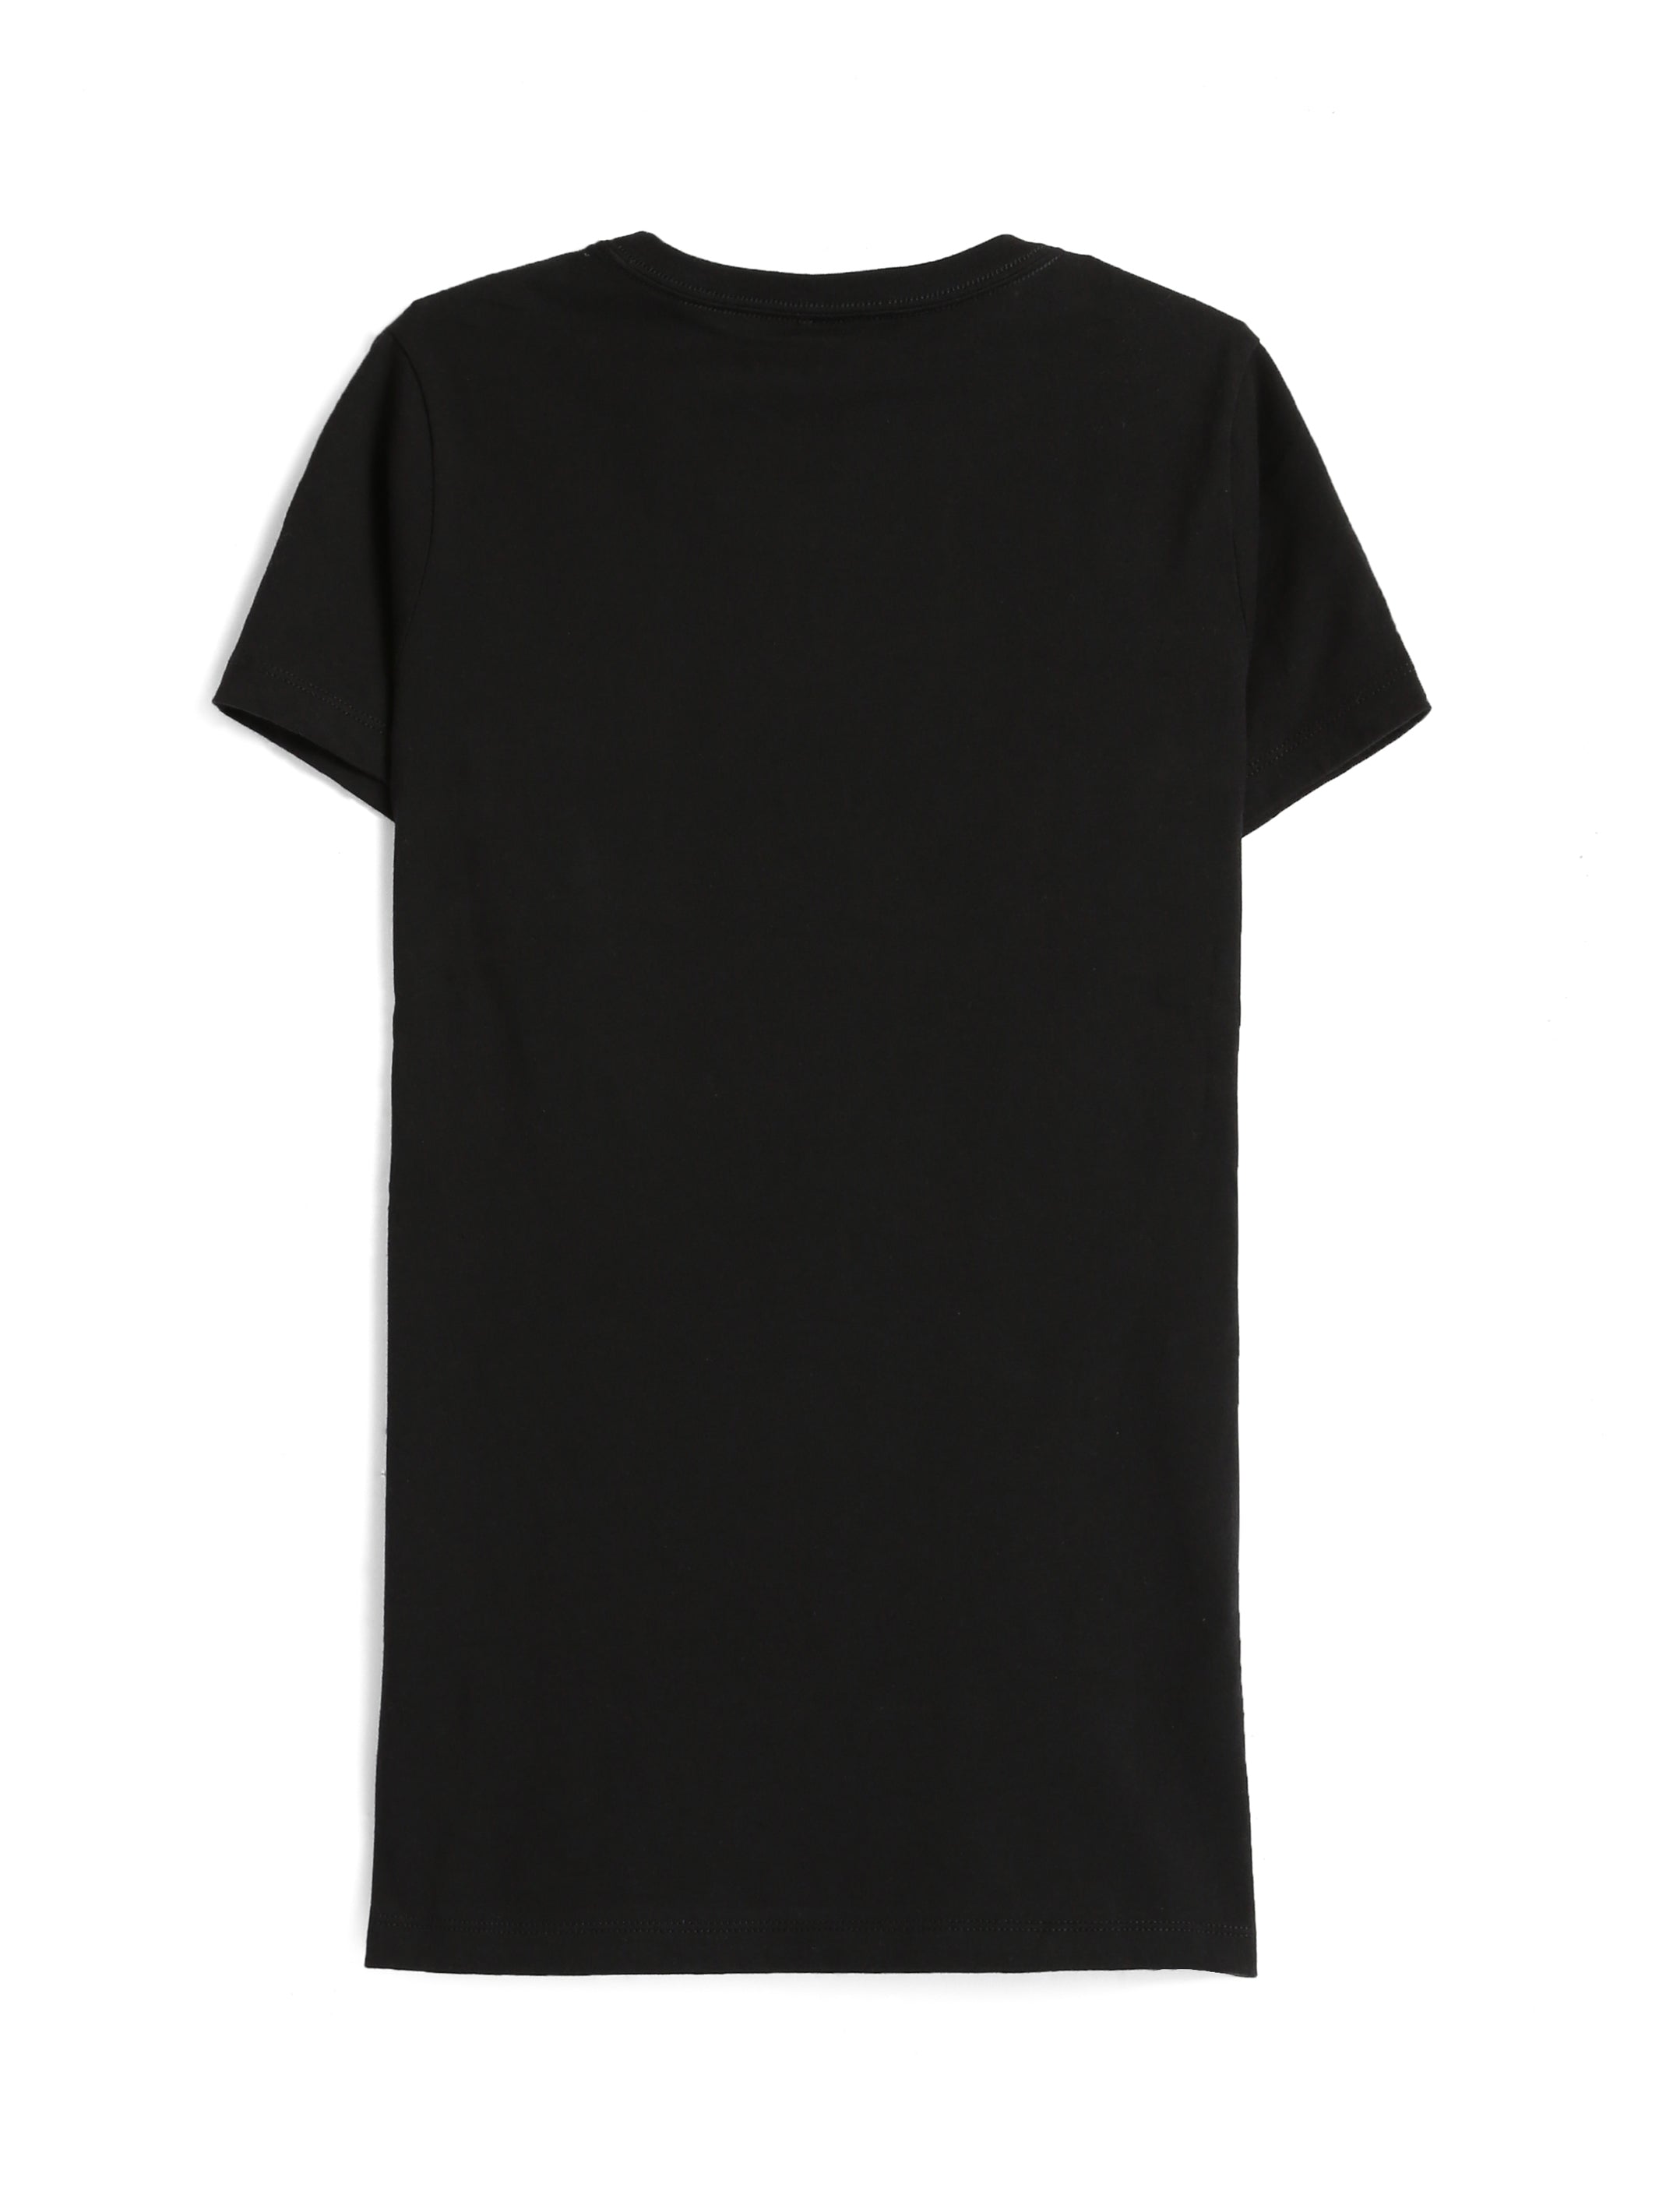 Women's Brooklyn Type T-Shirt - BROOKLYN INDUSTRIES